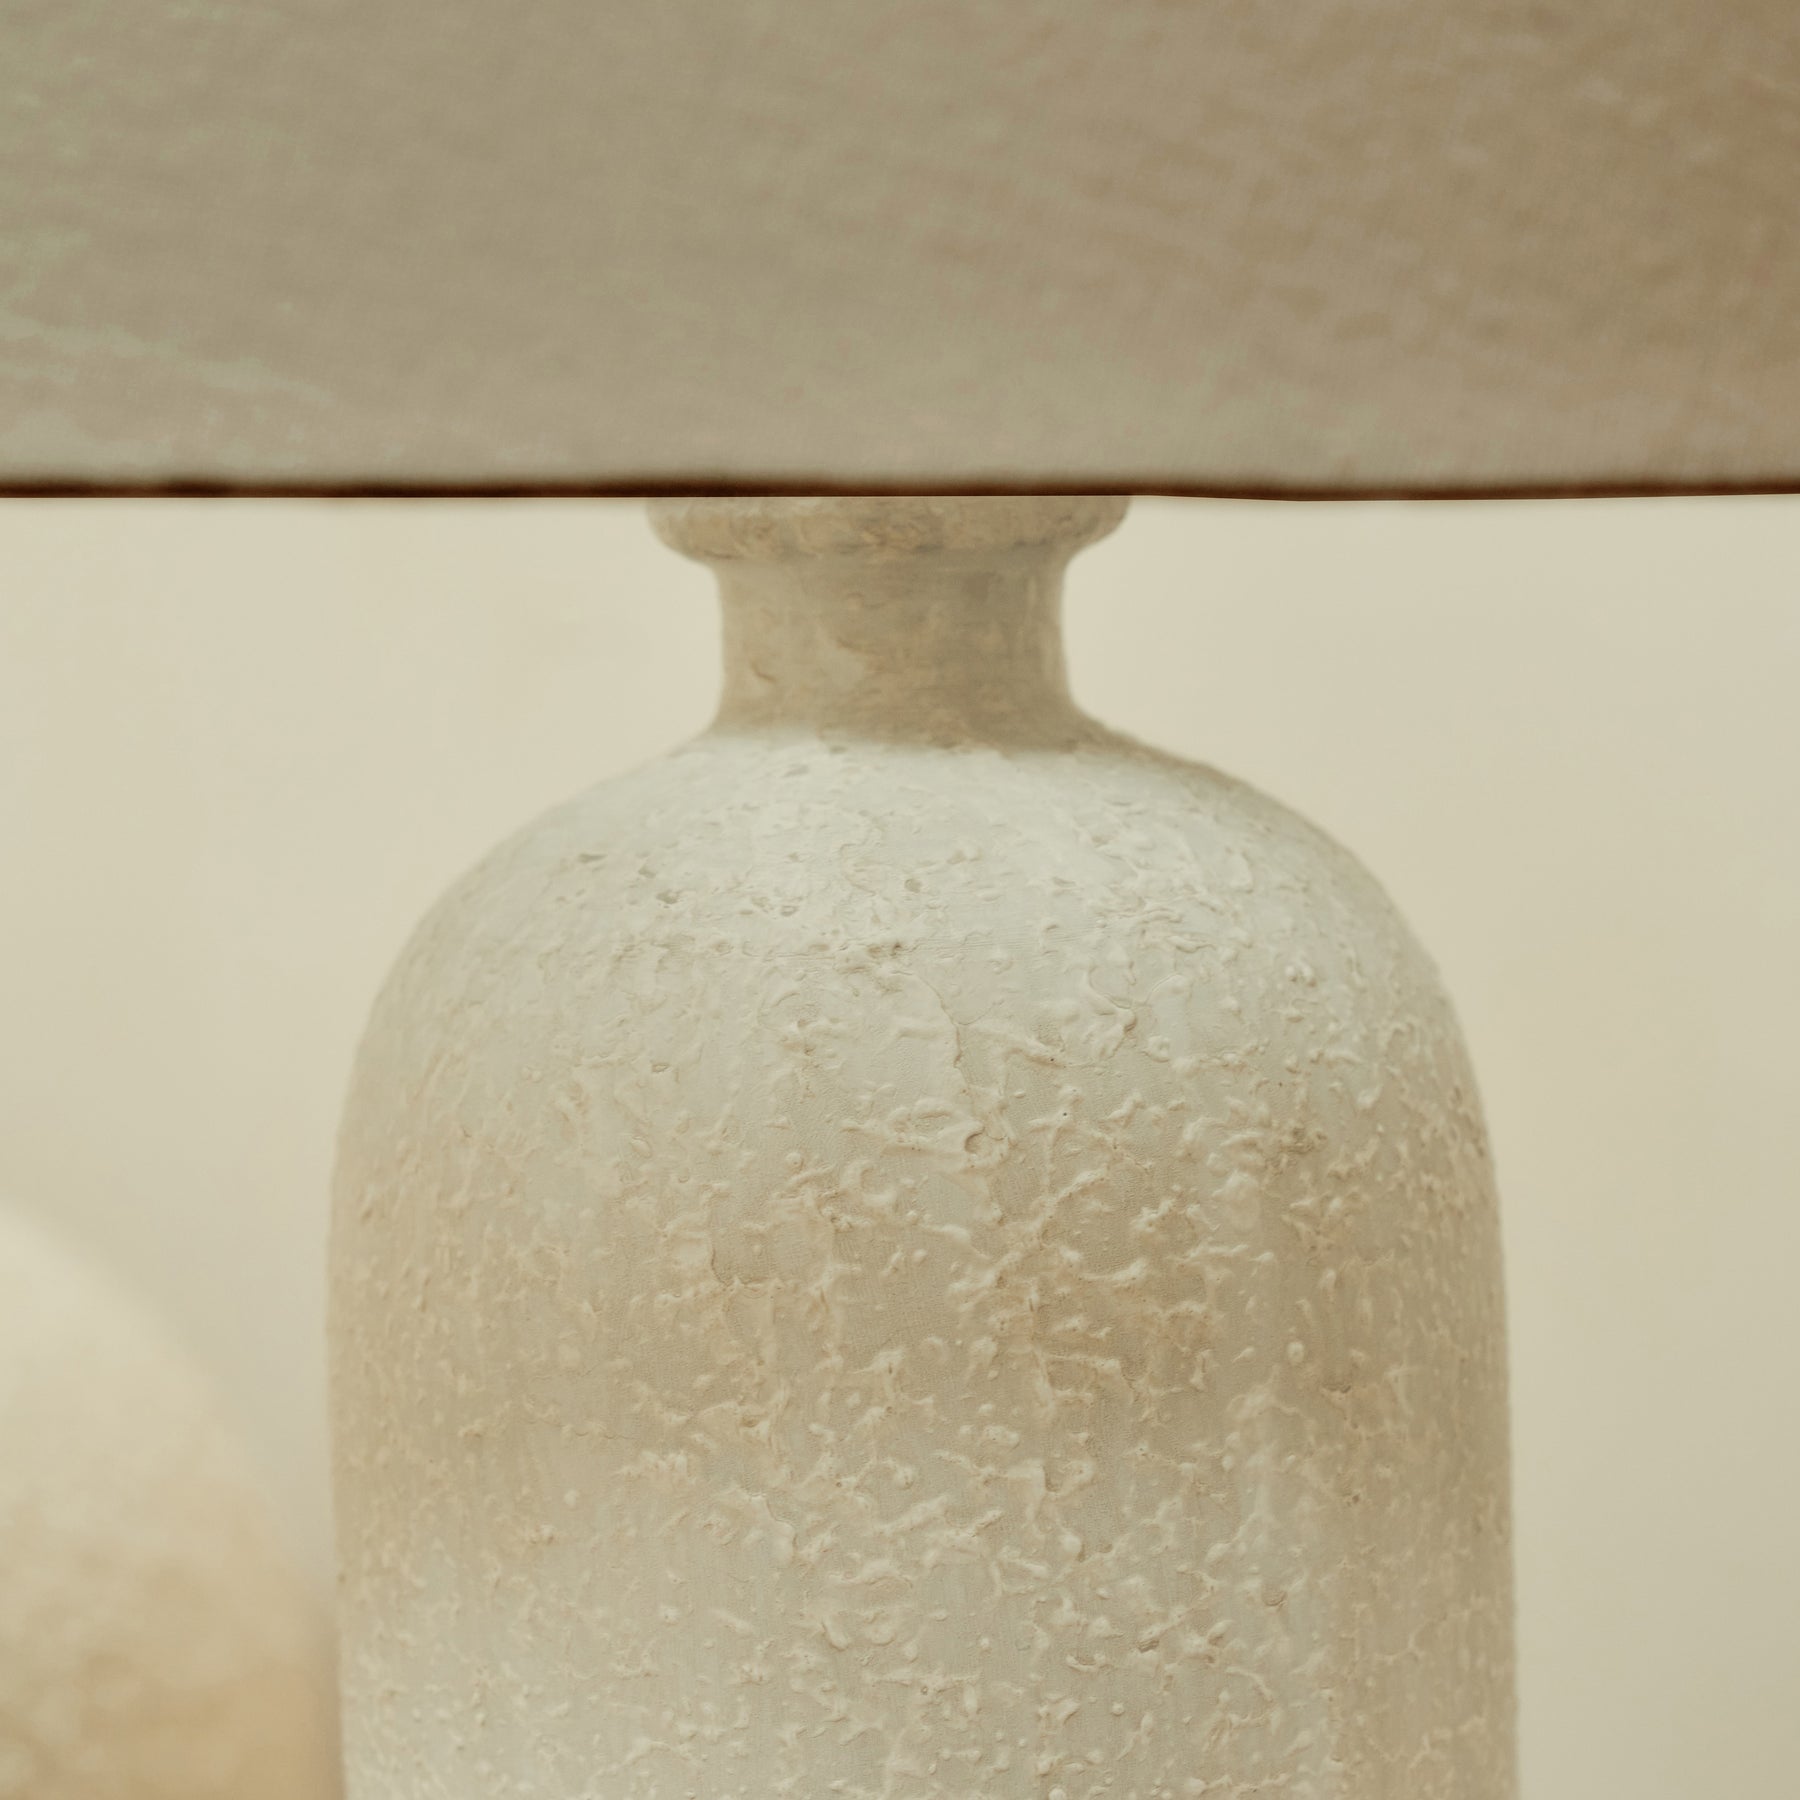 Palmaria - Textured Ceramic Based Table Lamp Beige Shade